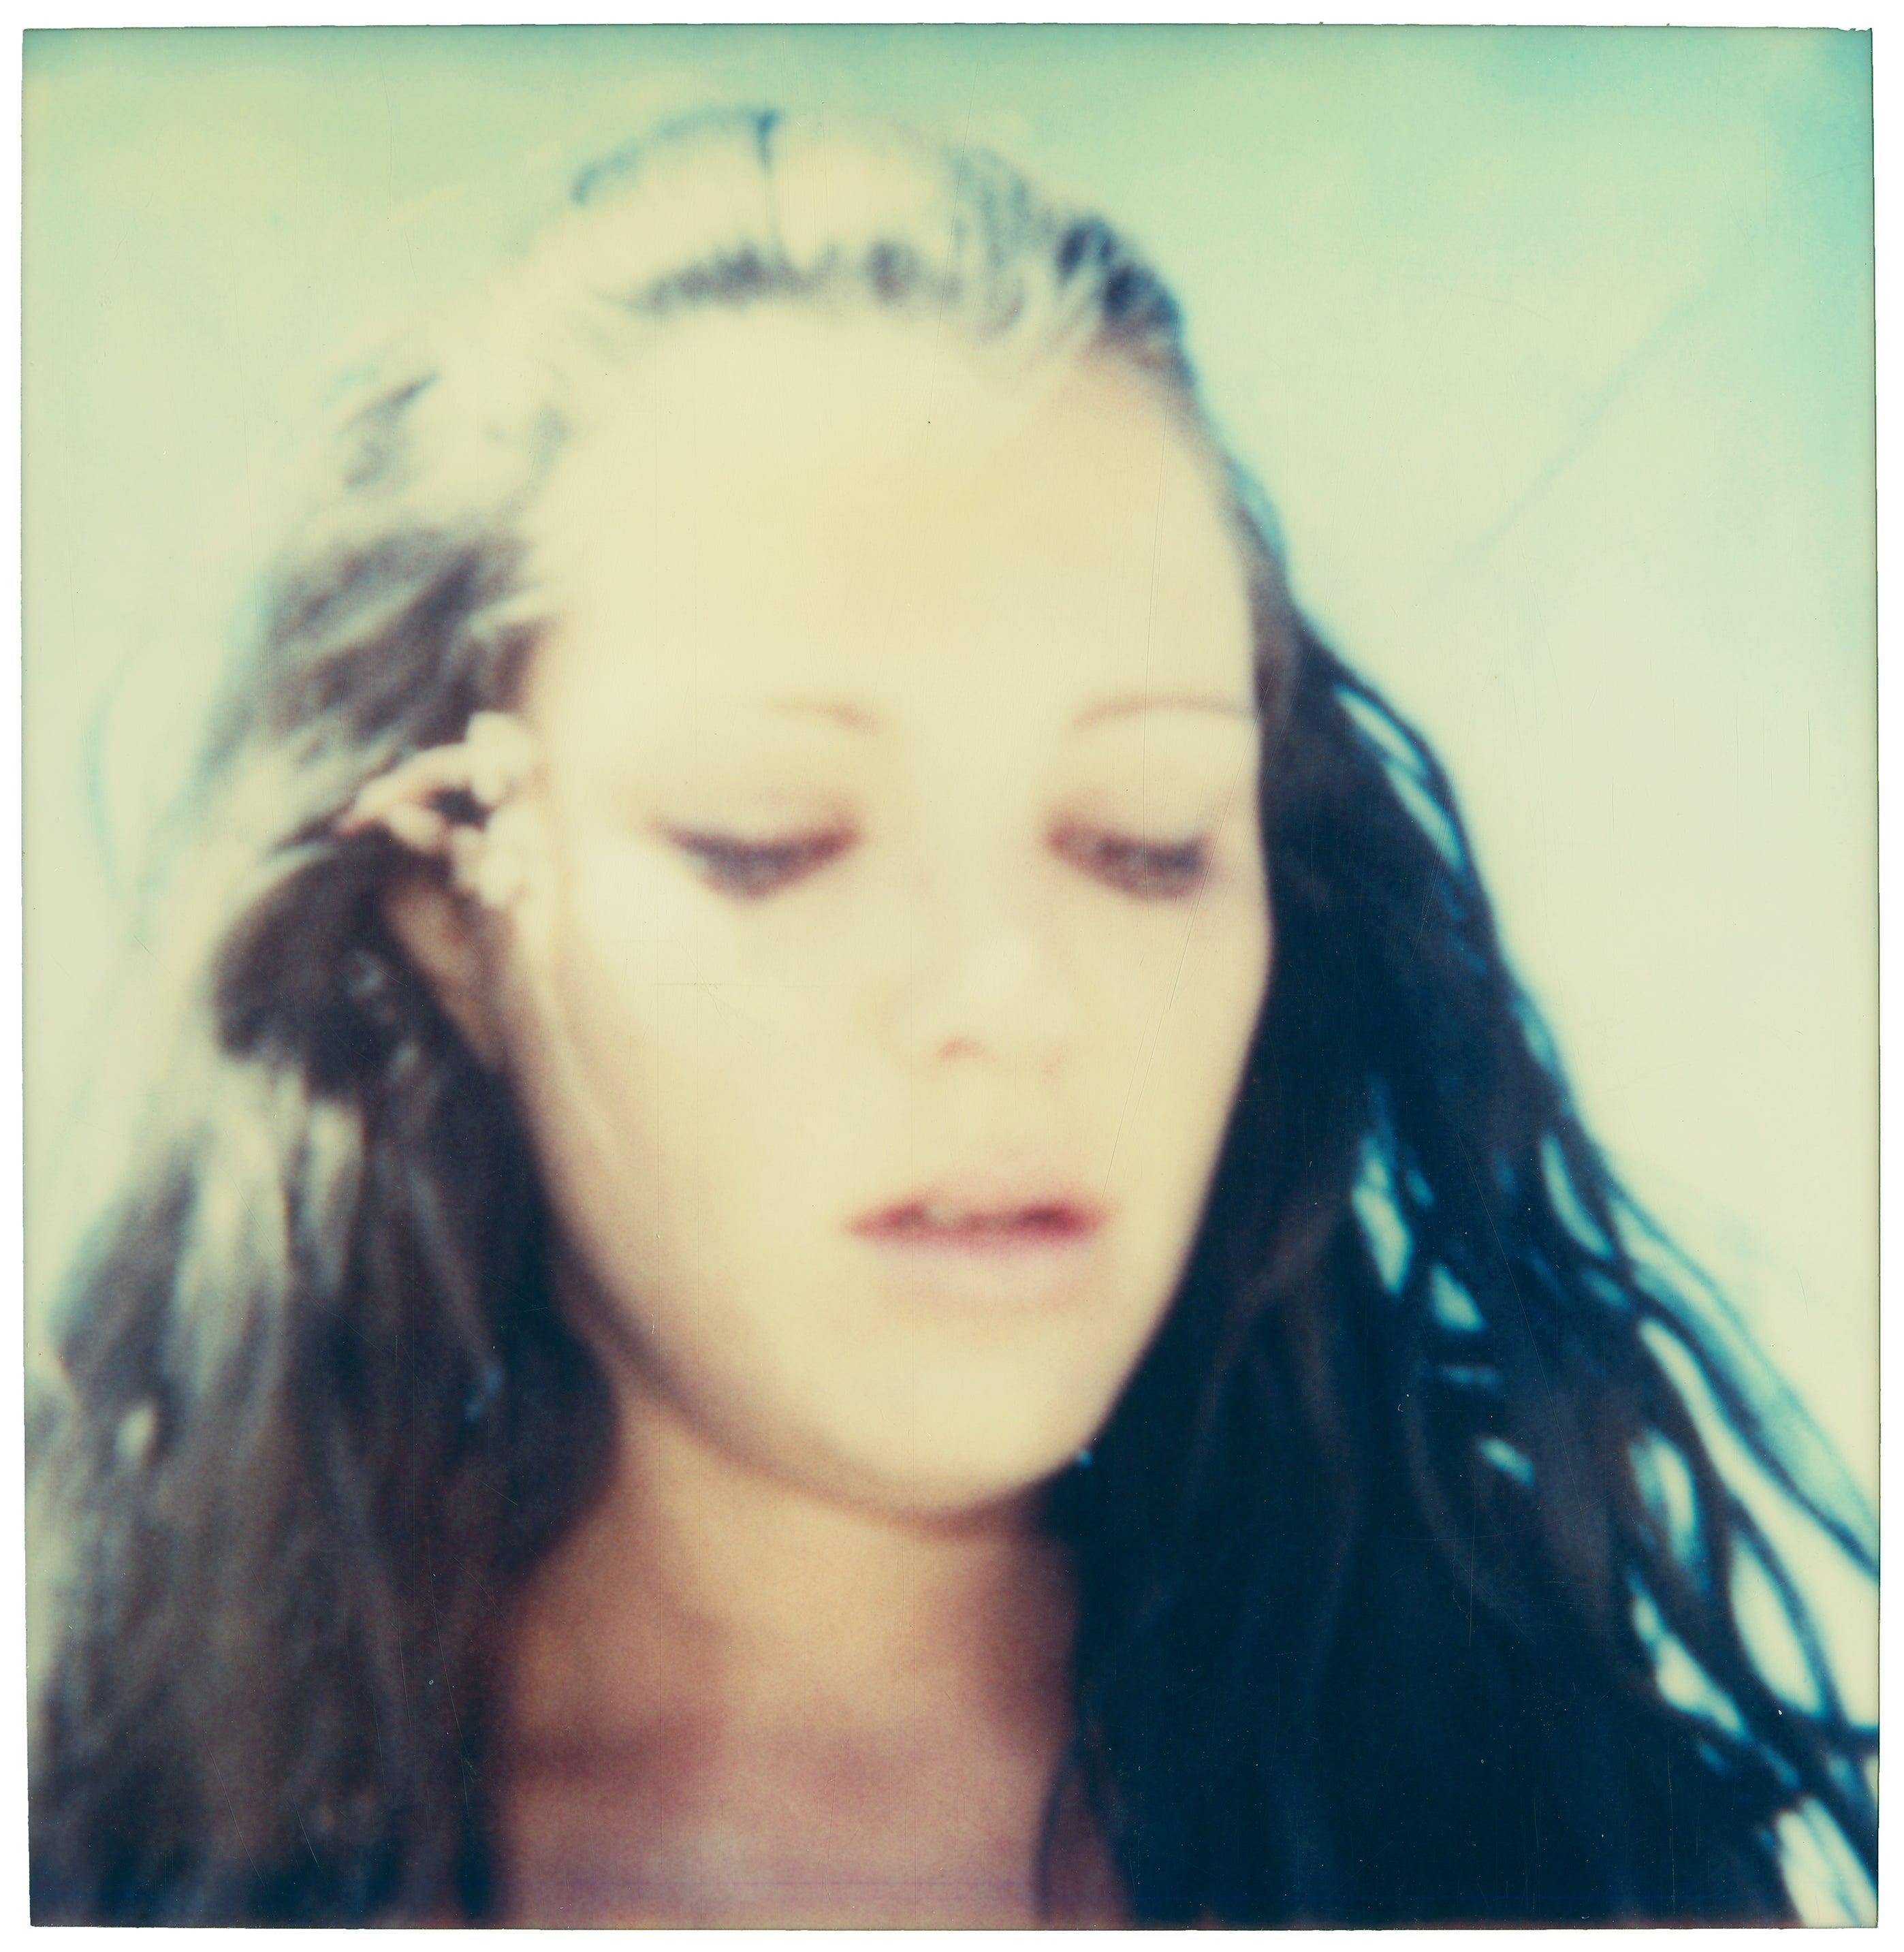 Stefanie Schneider Portrait Photograph - Pasolini (Immaculate Springs) starring Jacinda Barrett, based on a Polaroid